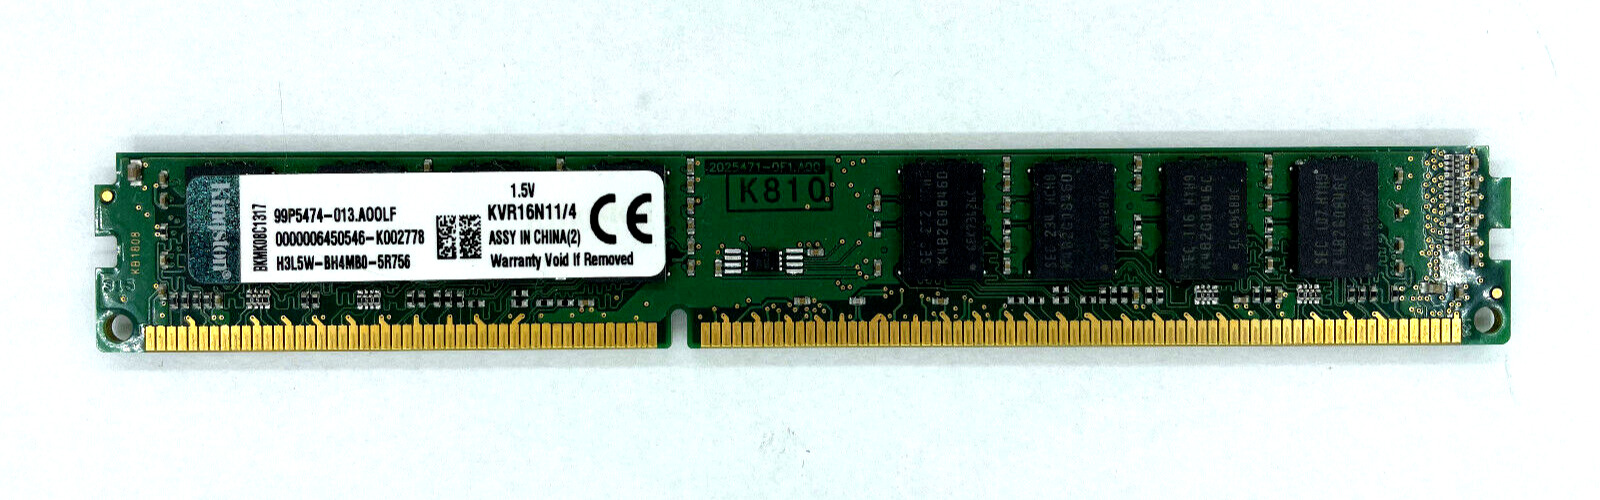 Kingston KVR16N11-4 DDR3 1x4 4GB 1600MHz PC3-12800 Single Stick Low Profile RAM